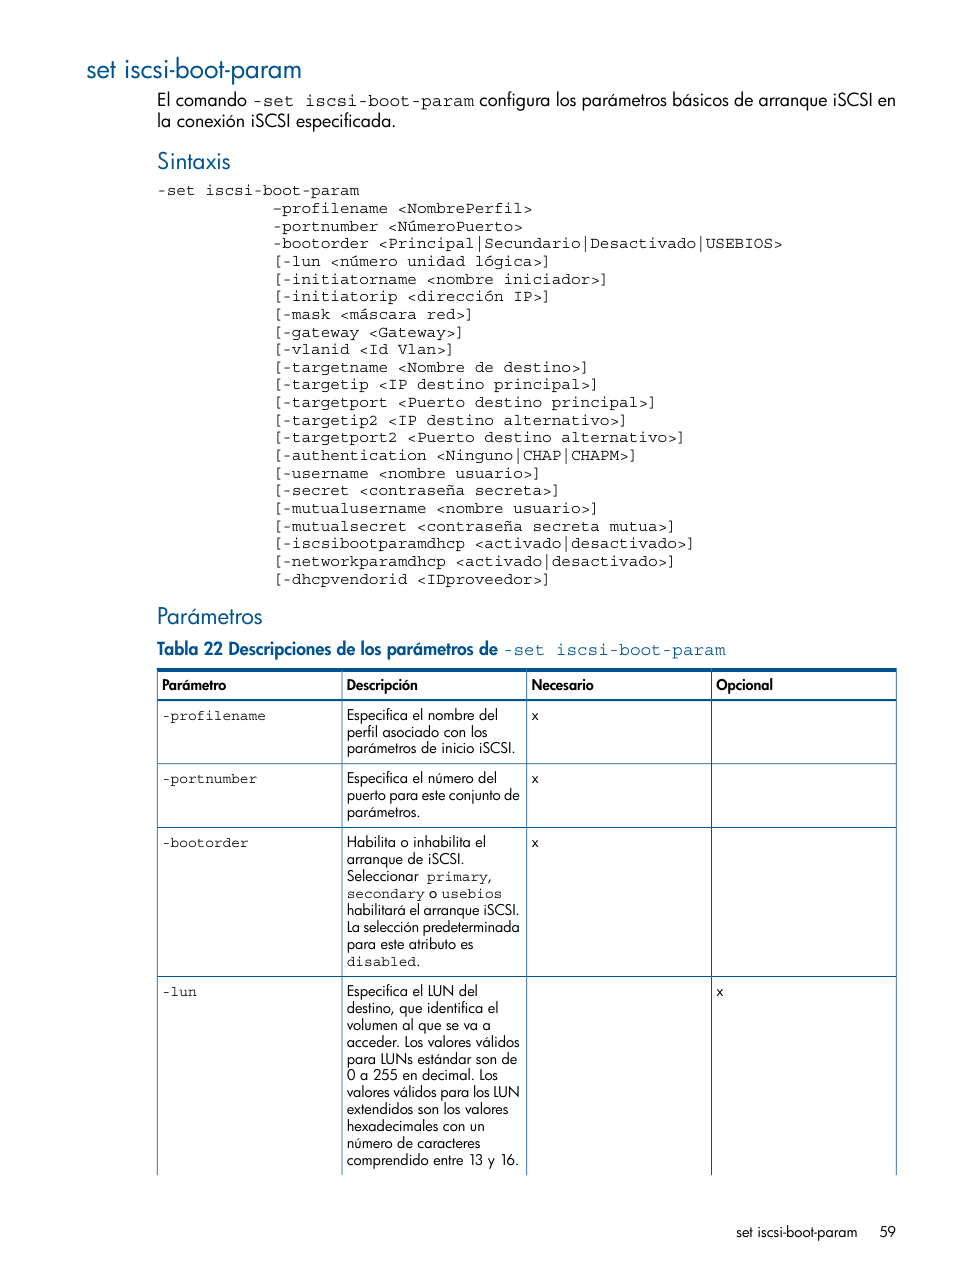 Set iscsi-boot-param, Sintaxis, Parámetros | HP Software HP Virtual Connect Enterprise Manager Manual del usuario | Página 59 / 123